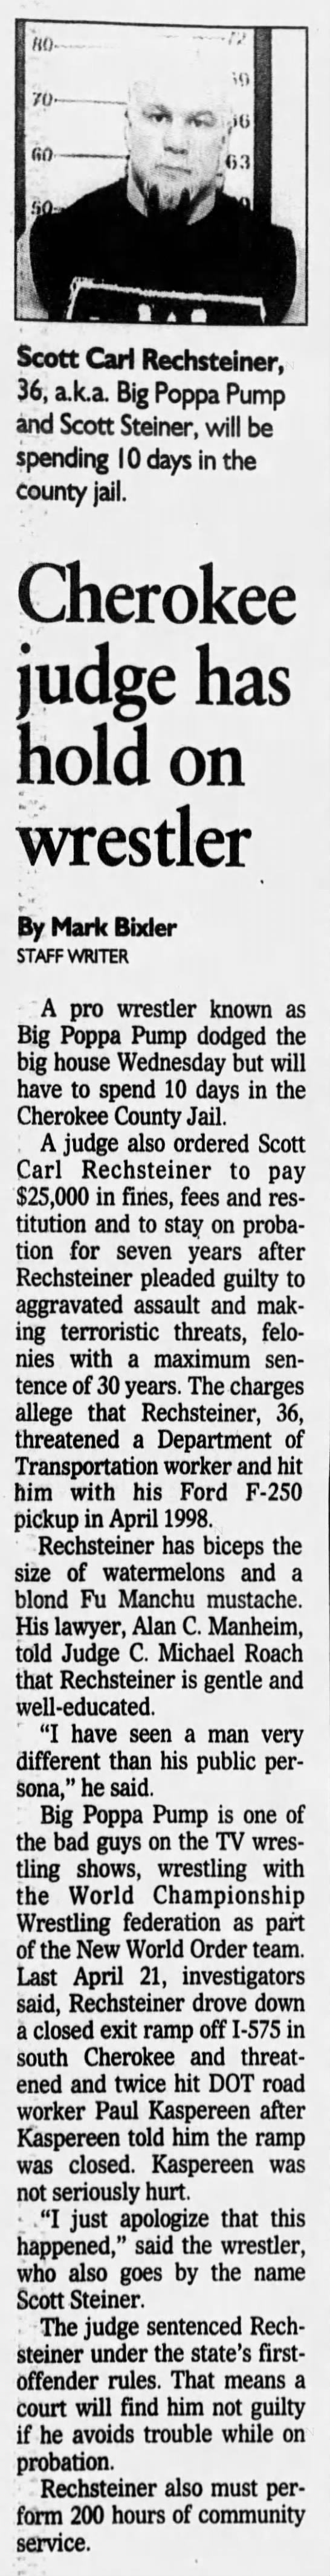 Cherokee judge has hold on wrestler [Scott Steiner] (Atlanta Constitution 3/18/1999) - 